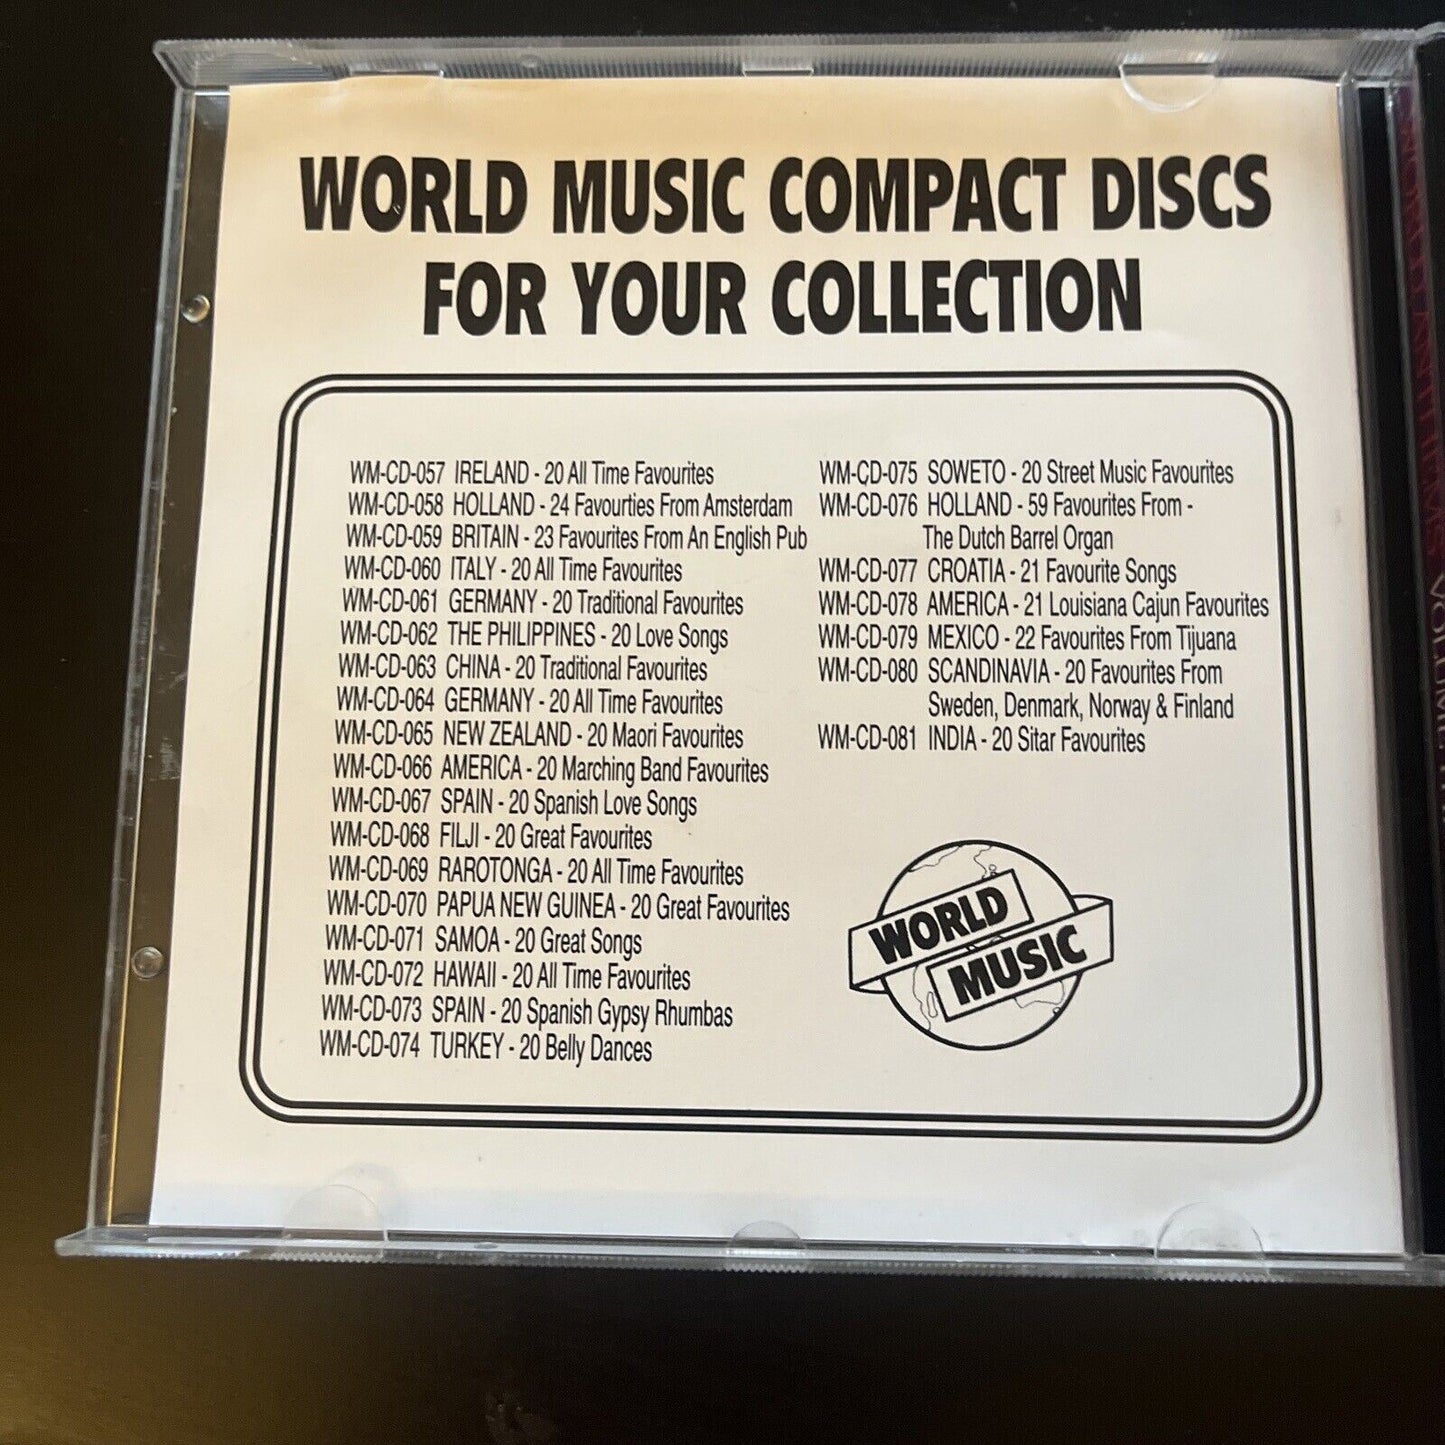 World Anthems - Volume 3 - 20 National Anthems (CD, 1997)